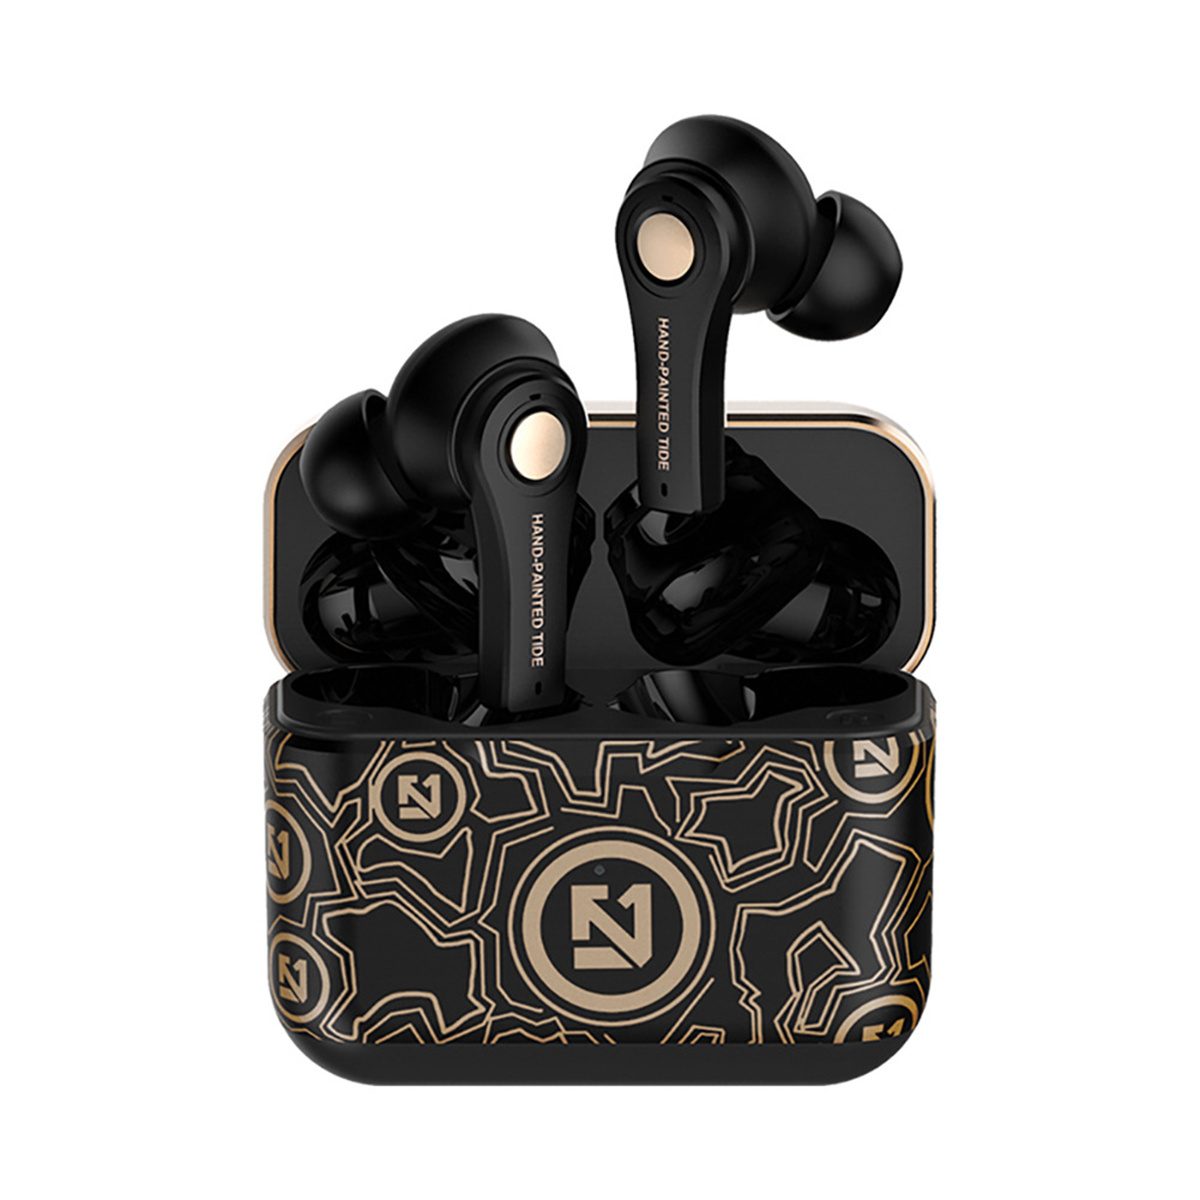 Geräuschunterdrückung, In-ear Wasserdichtes Bluetooth Bluetooth Schwarz mit Bluetooth Kabelloses schwarz In-Ear SYNTEK Headset Headset Kopfhörer